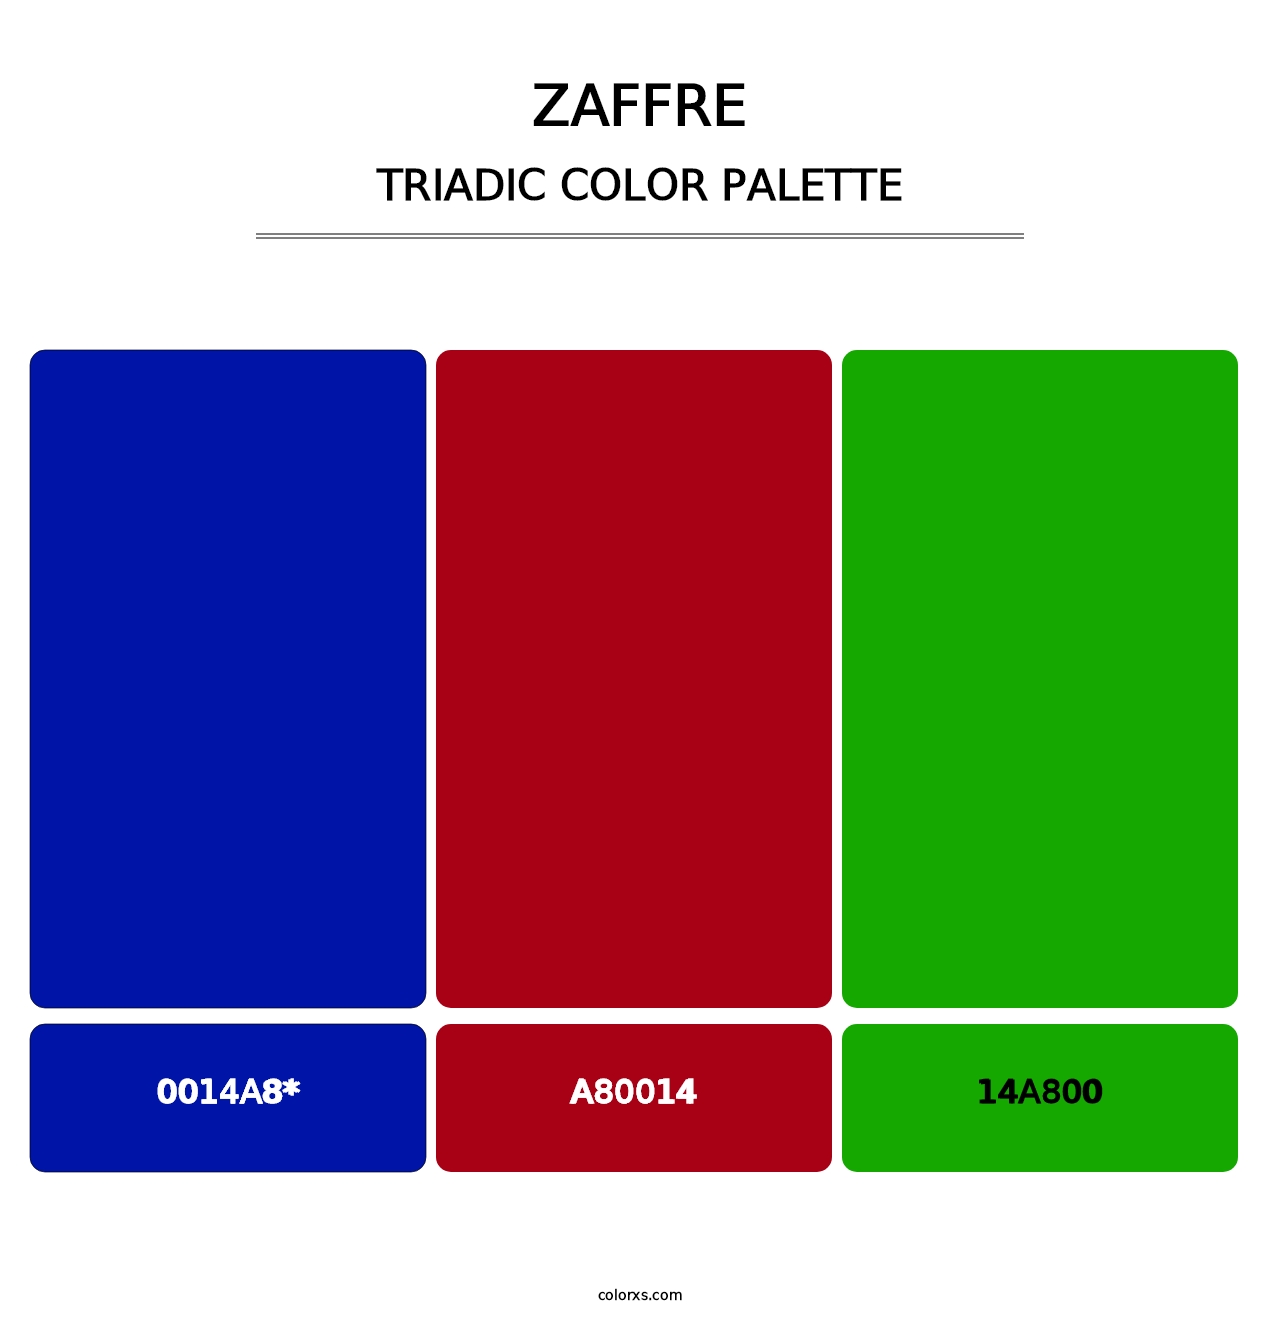 Zaffre - Triadic Color Palette